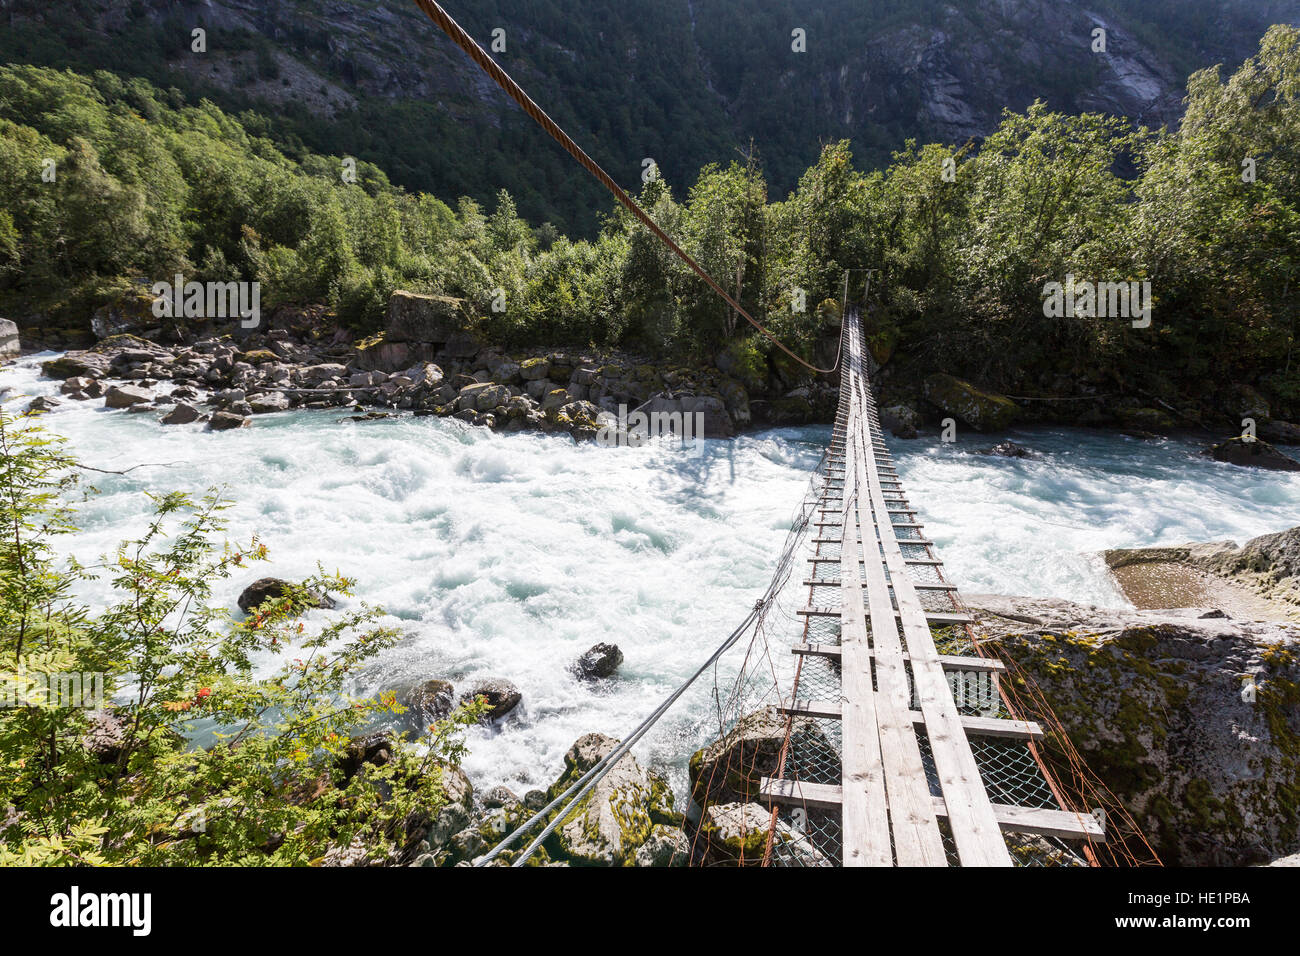 Norway jostedal selva rafting wild water rafting dangerous bridge hi-res  stock photography and images - Alamy